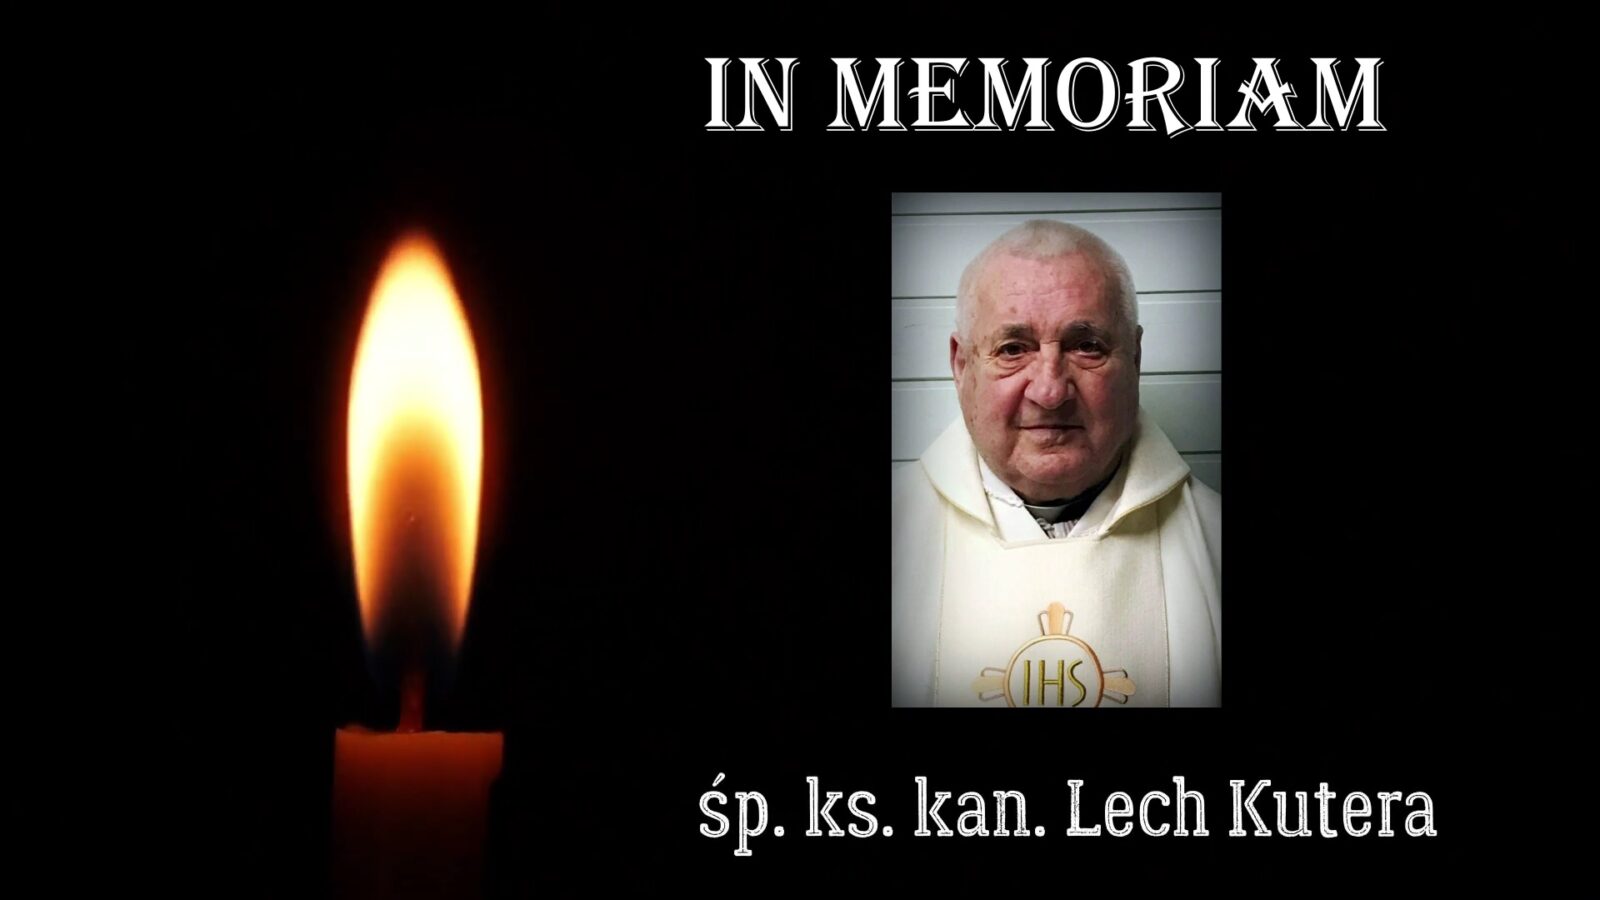 In memoriam – ks. kan. Lech Kutera